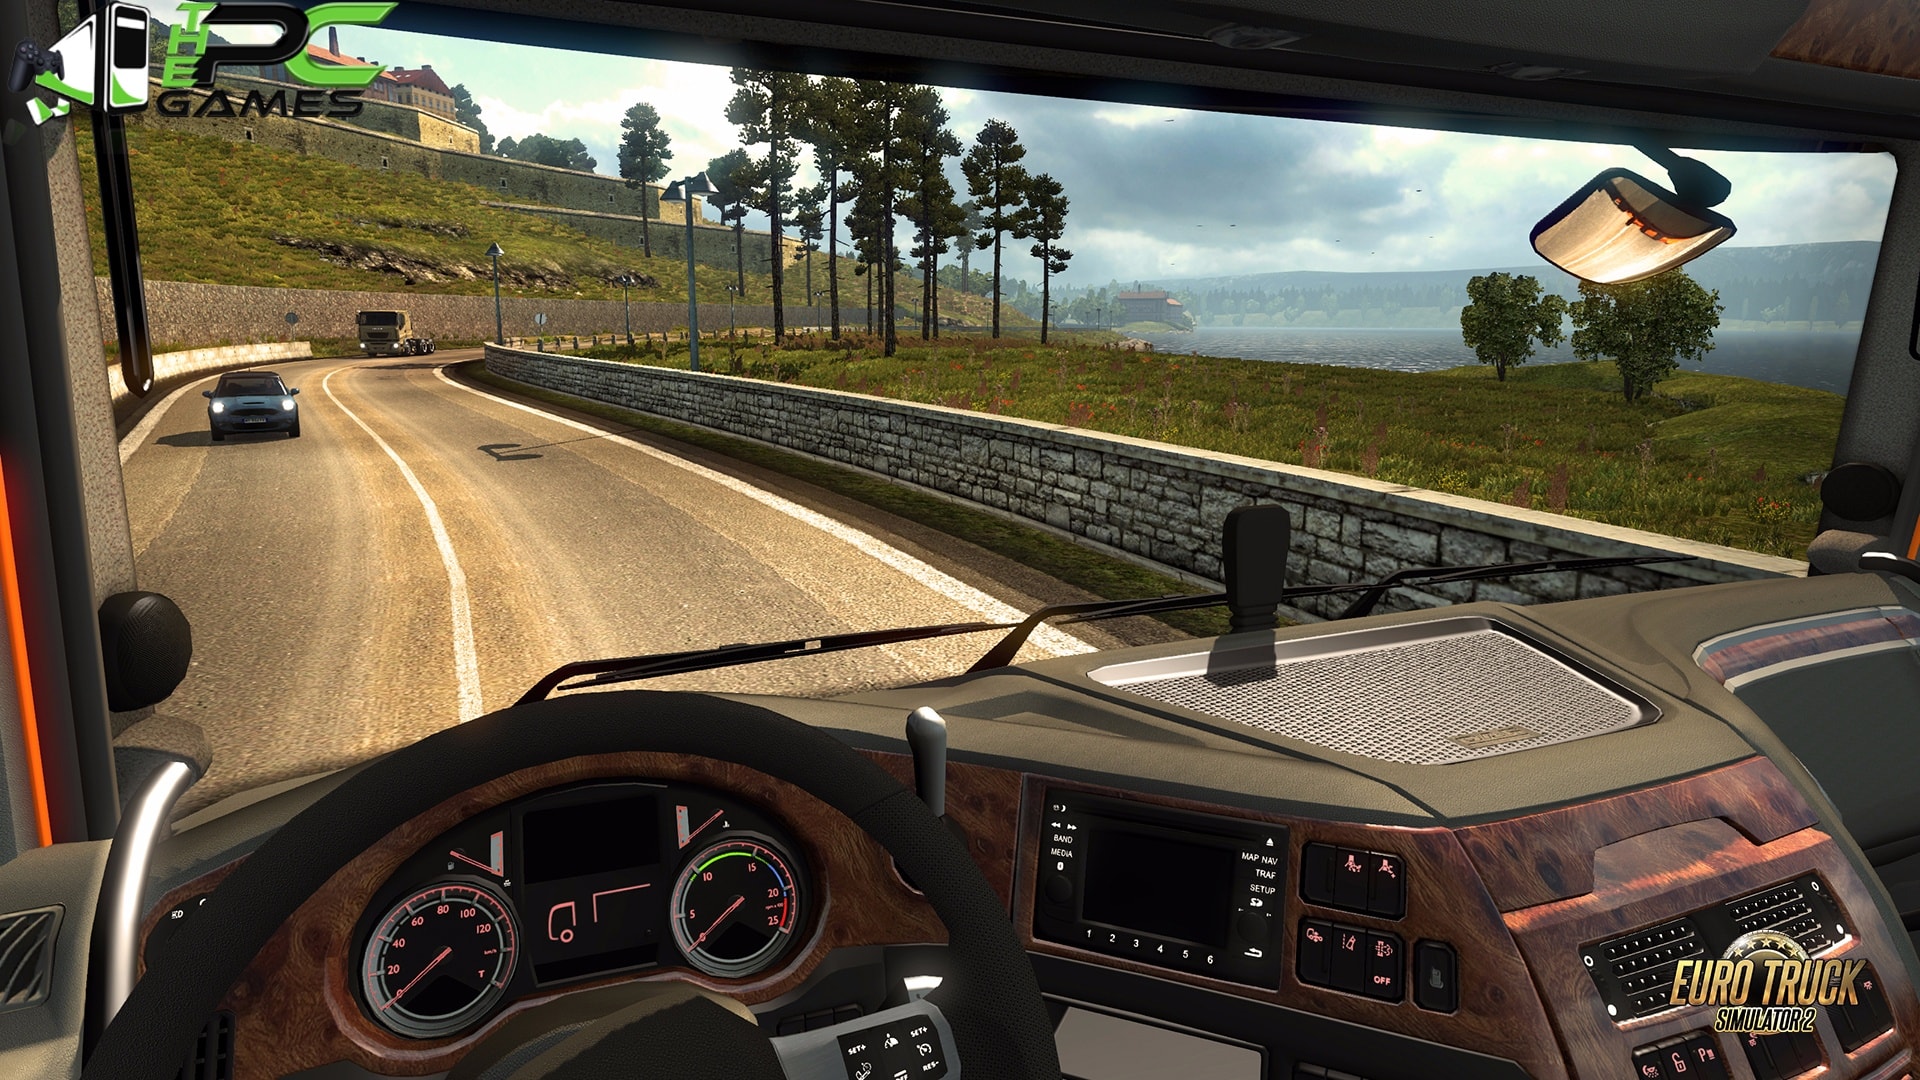 Truck driving simulator pc games free download